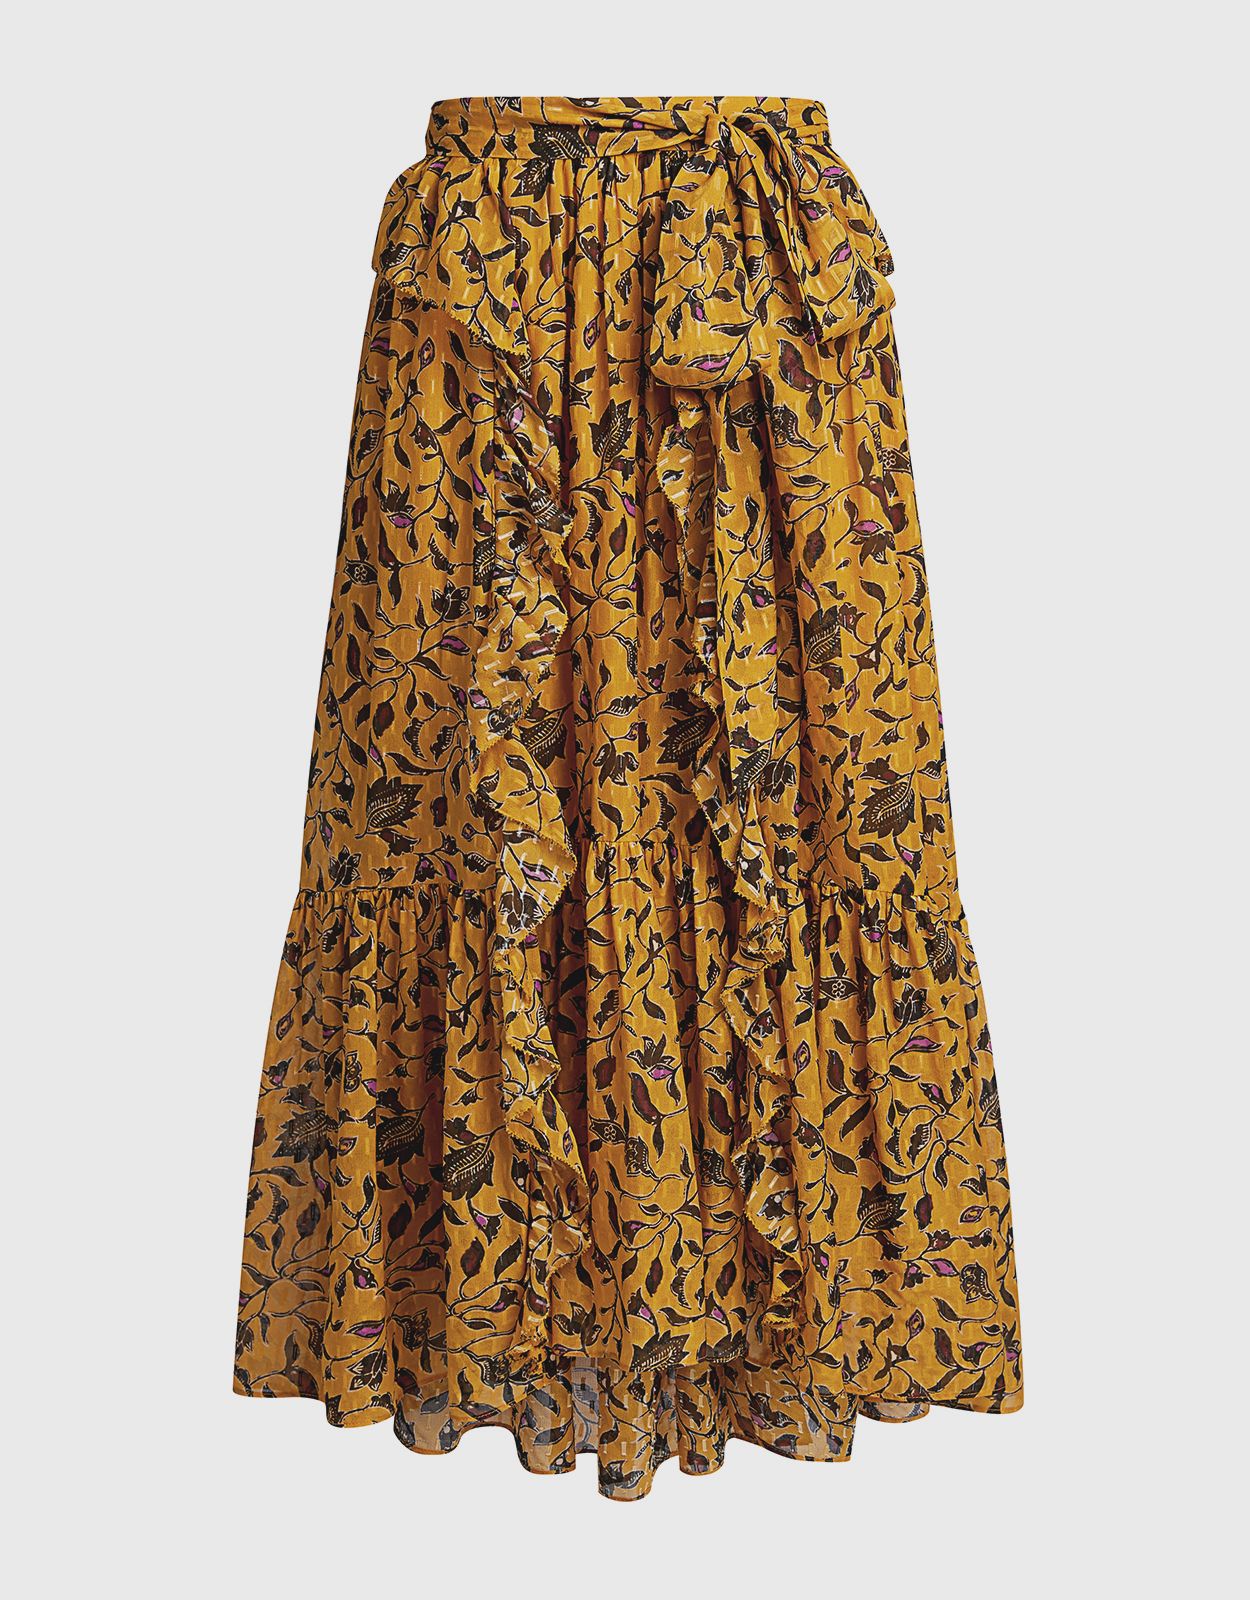 Ulla Johnson Fae Ruffled Floral Midi Skirt (Skirts,Midi) IFCHIC.COM